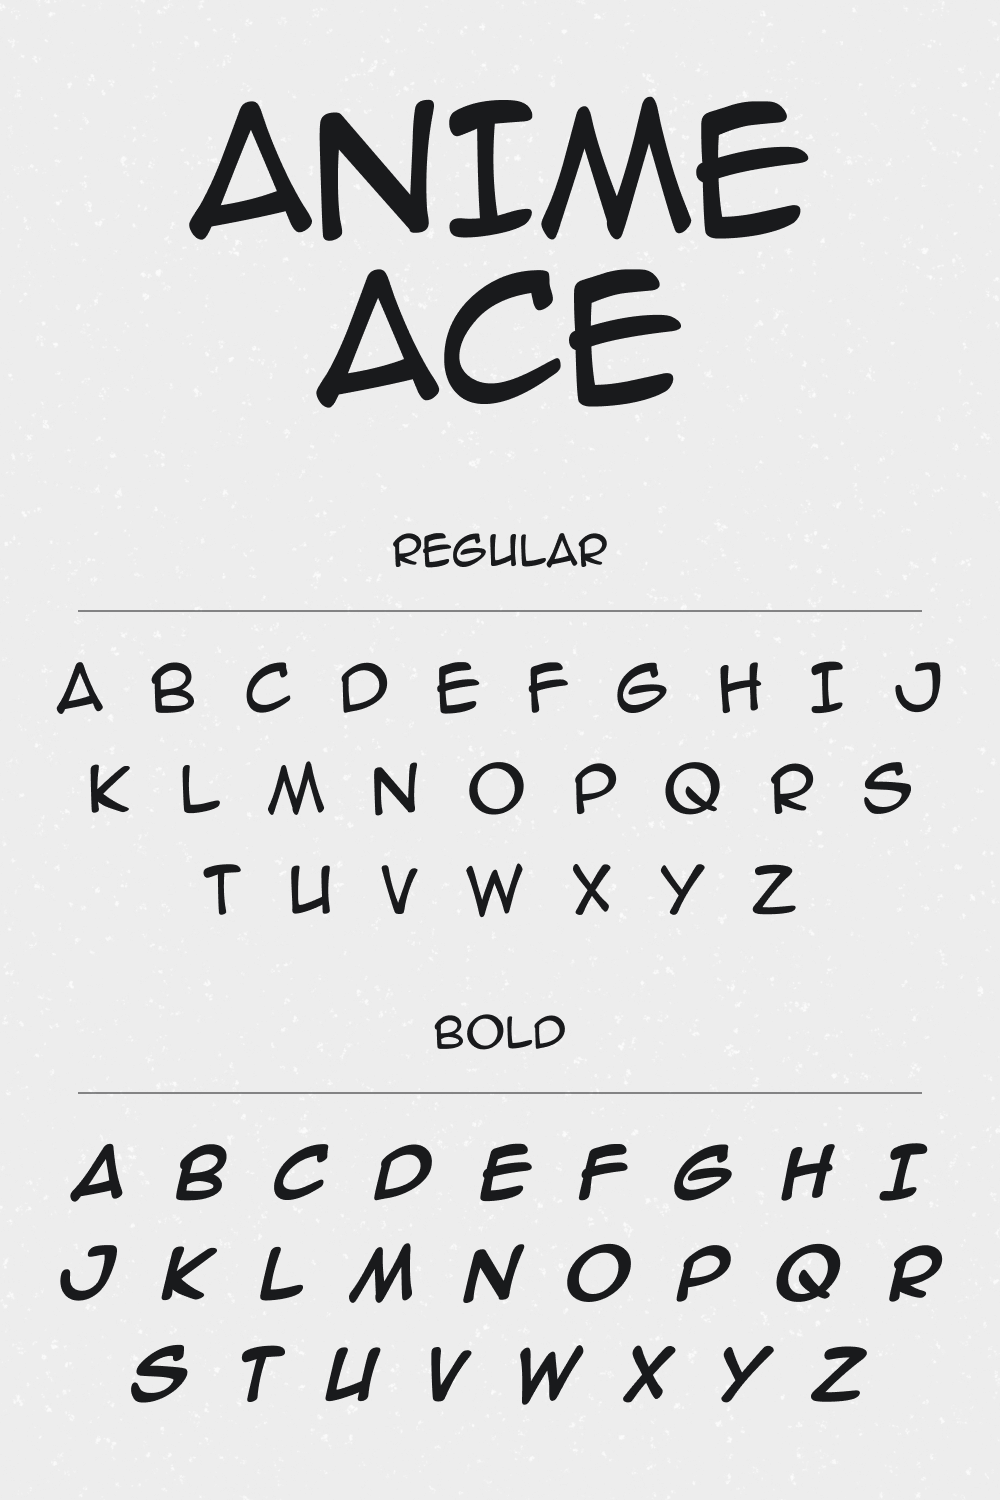 01 anime ace free font pinterest